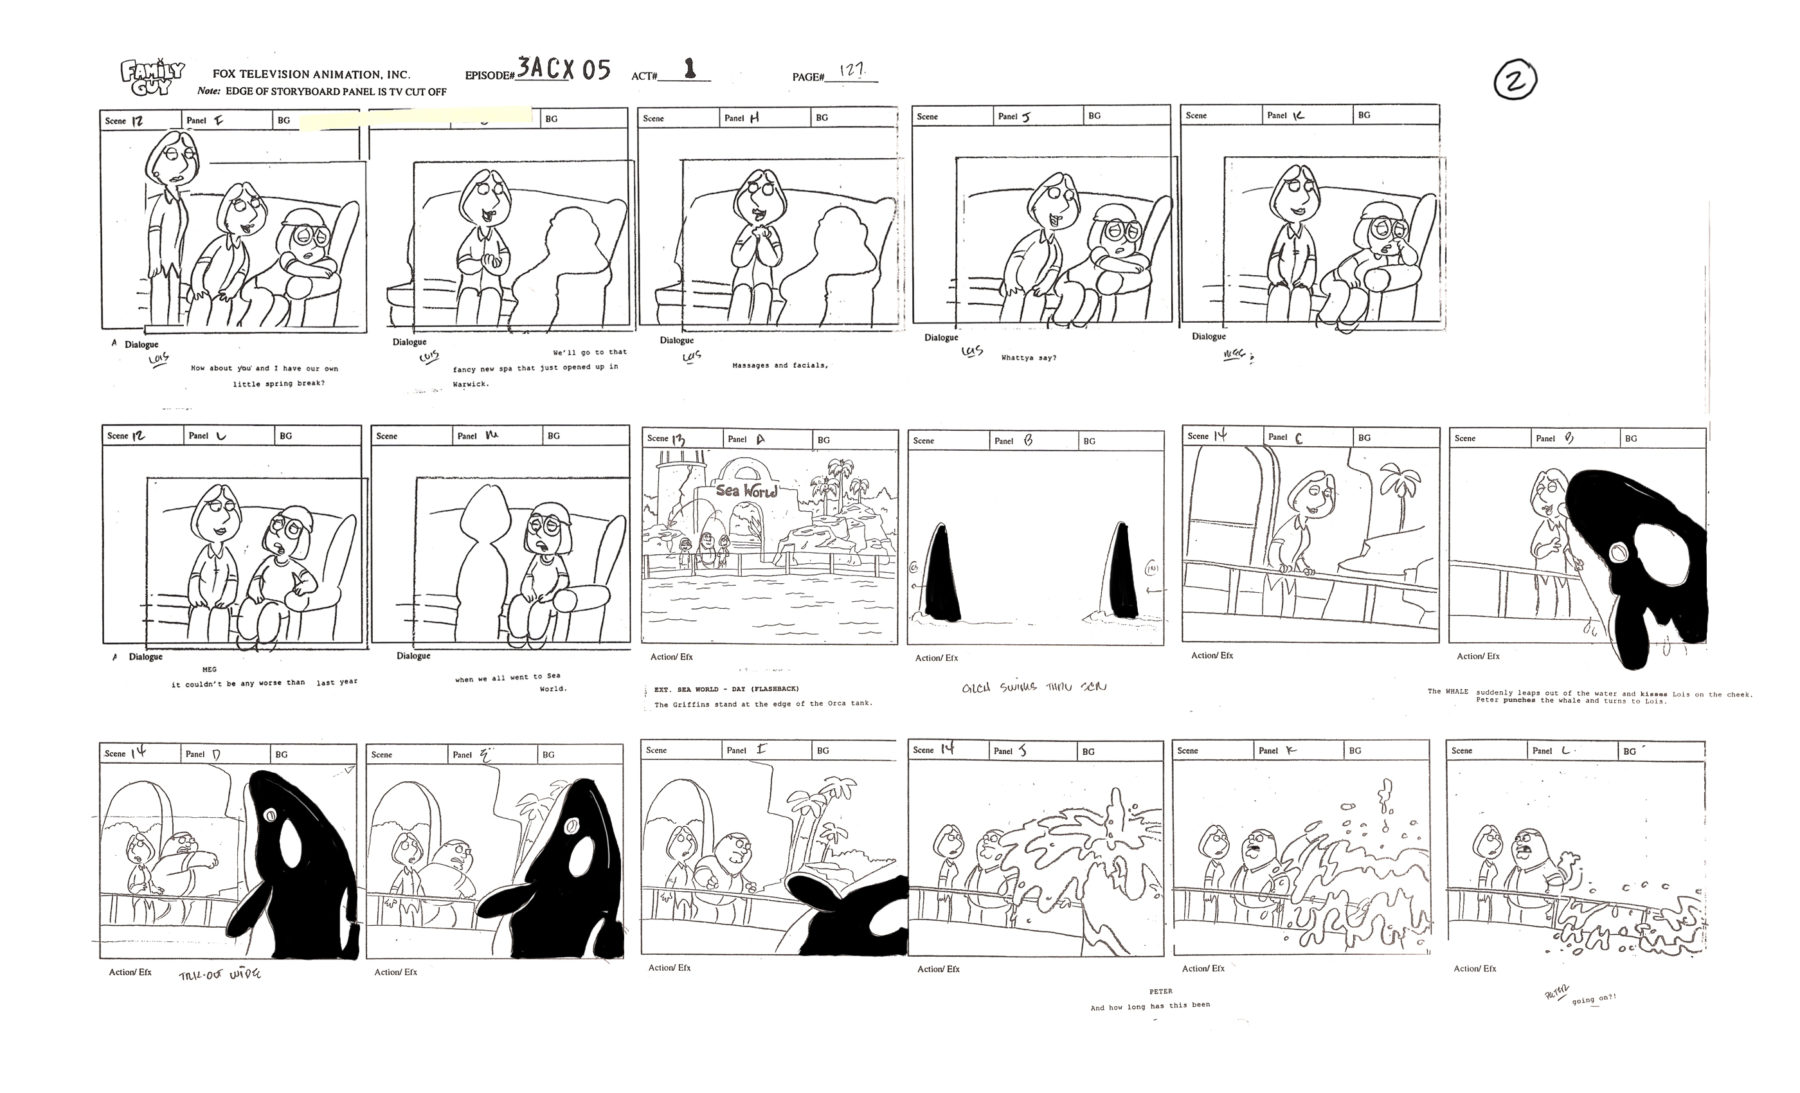 Bert Ring's storyboards for The Family Guy, Fox TV Animation